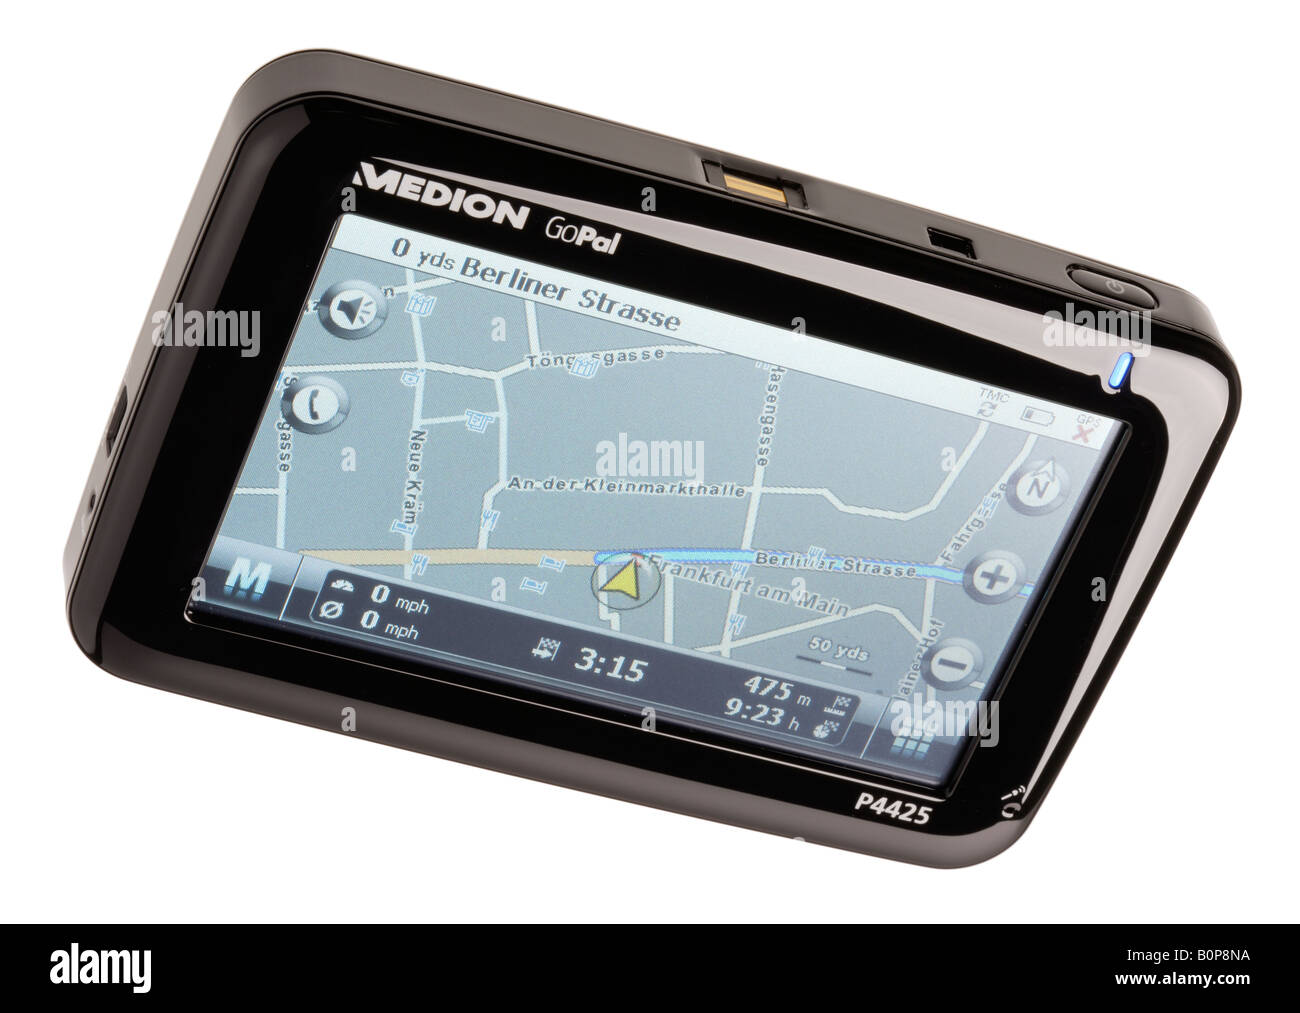 Medion Go satellite navigation Photo - Alamy